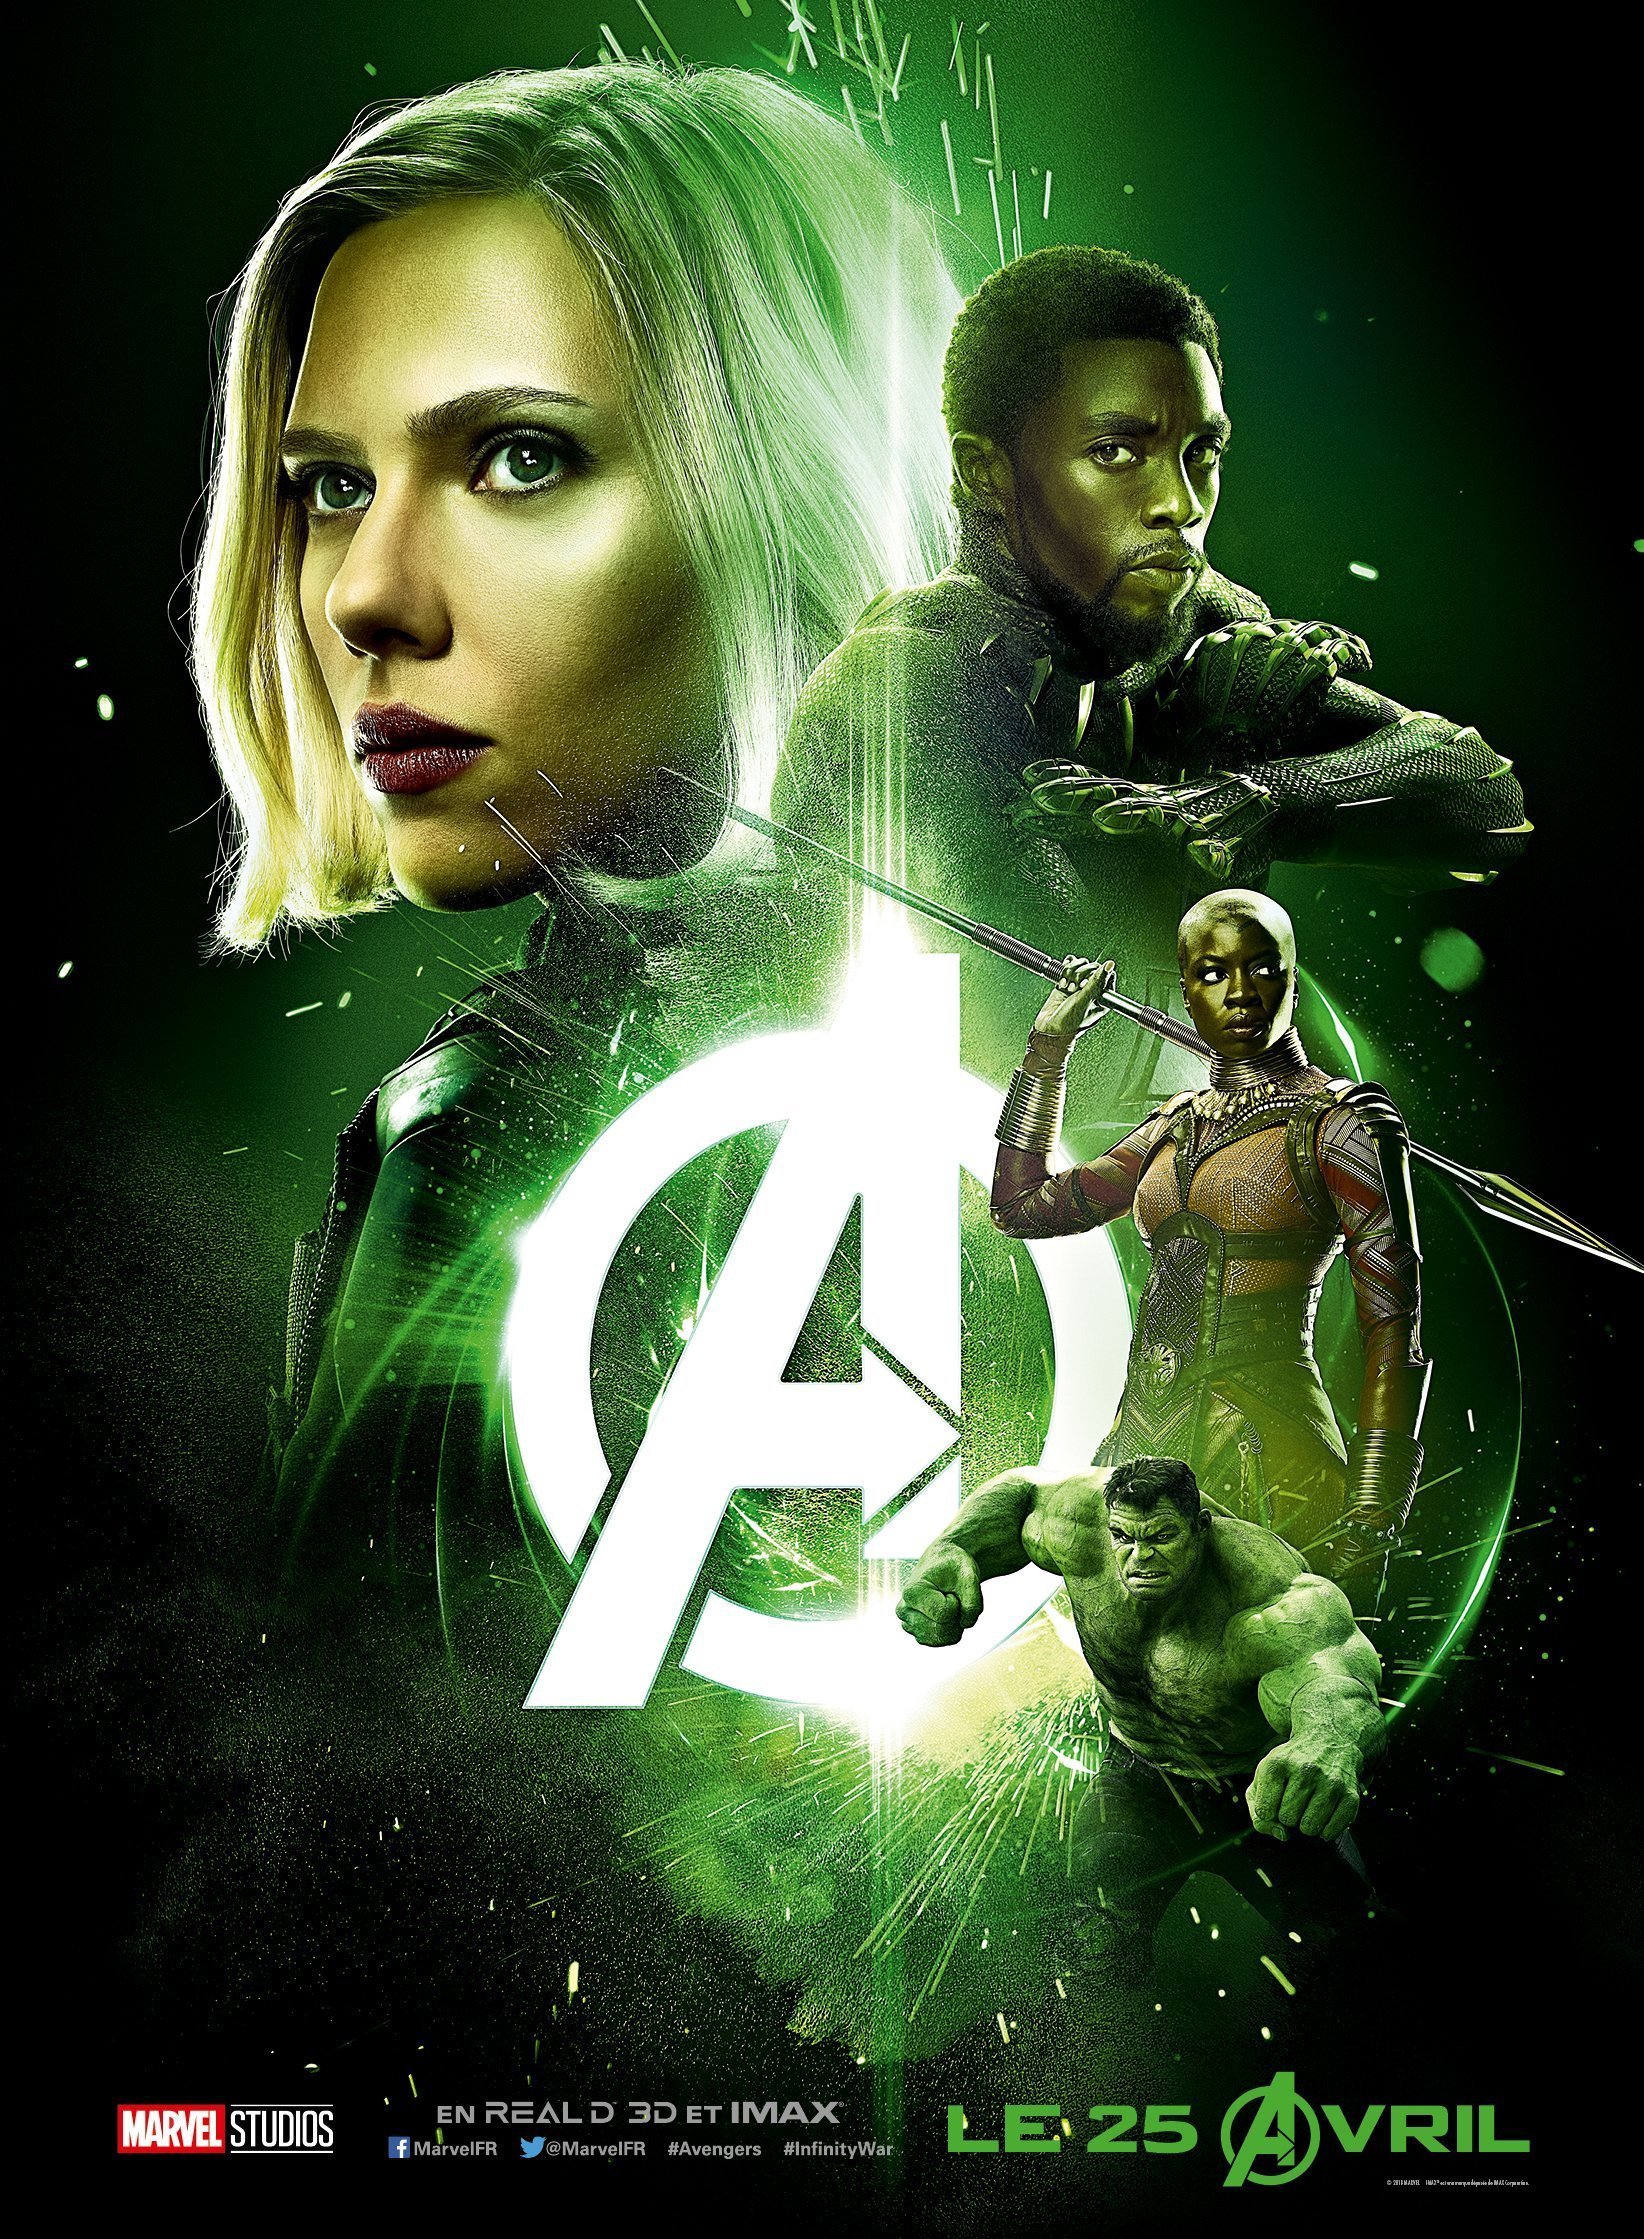 Affiche du film Avengers: Infinity War avec l'équipe verte